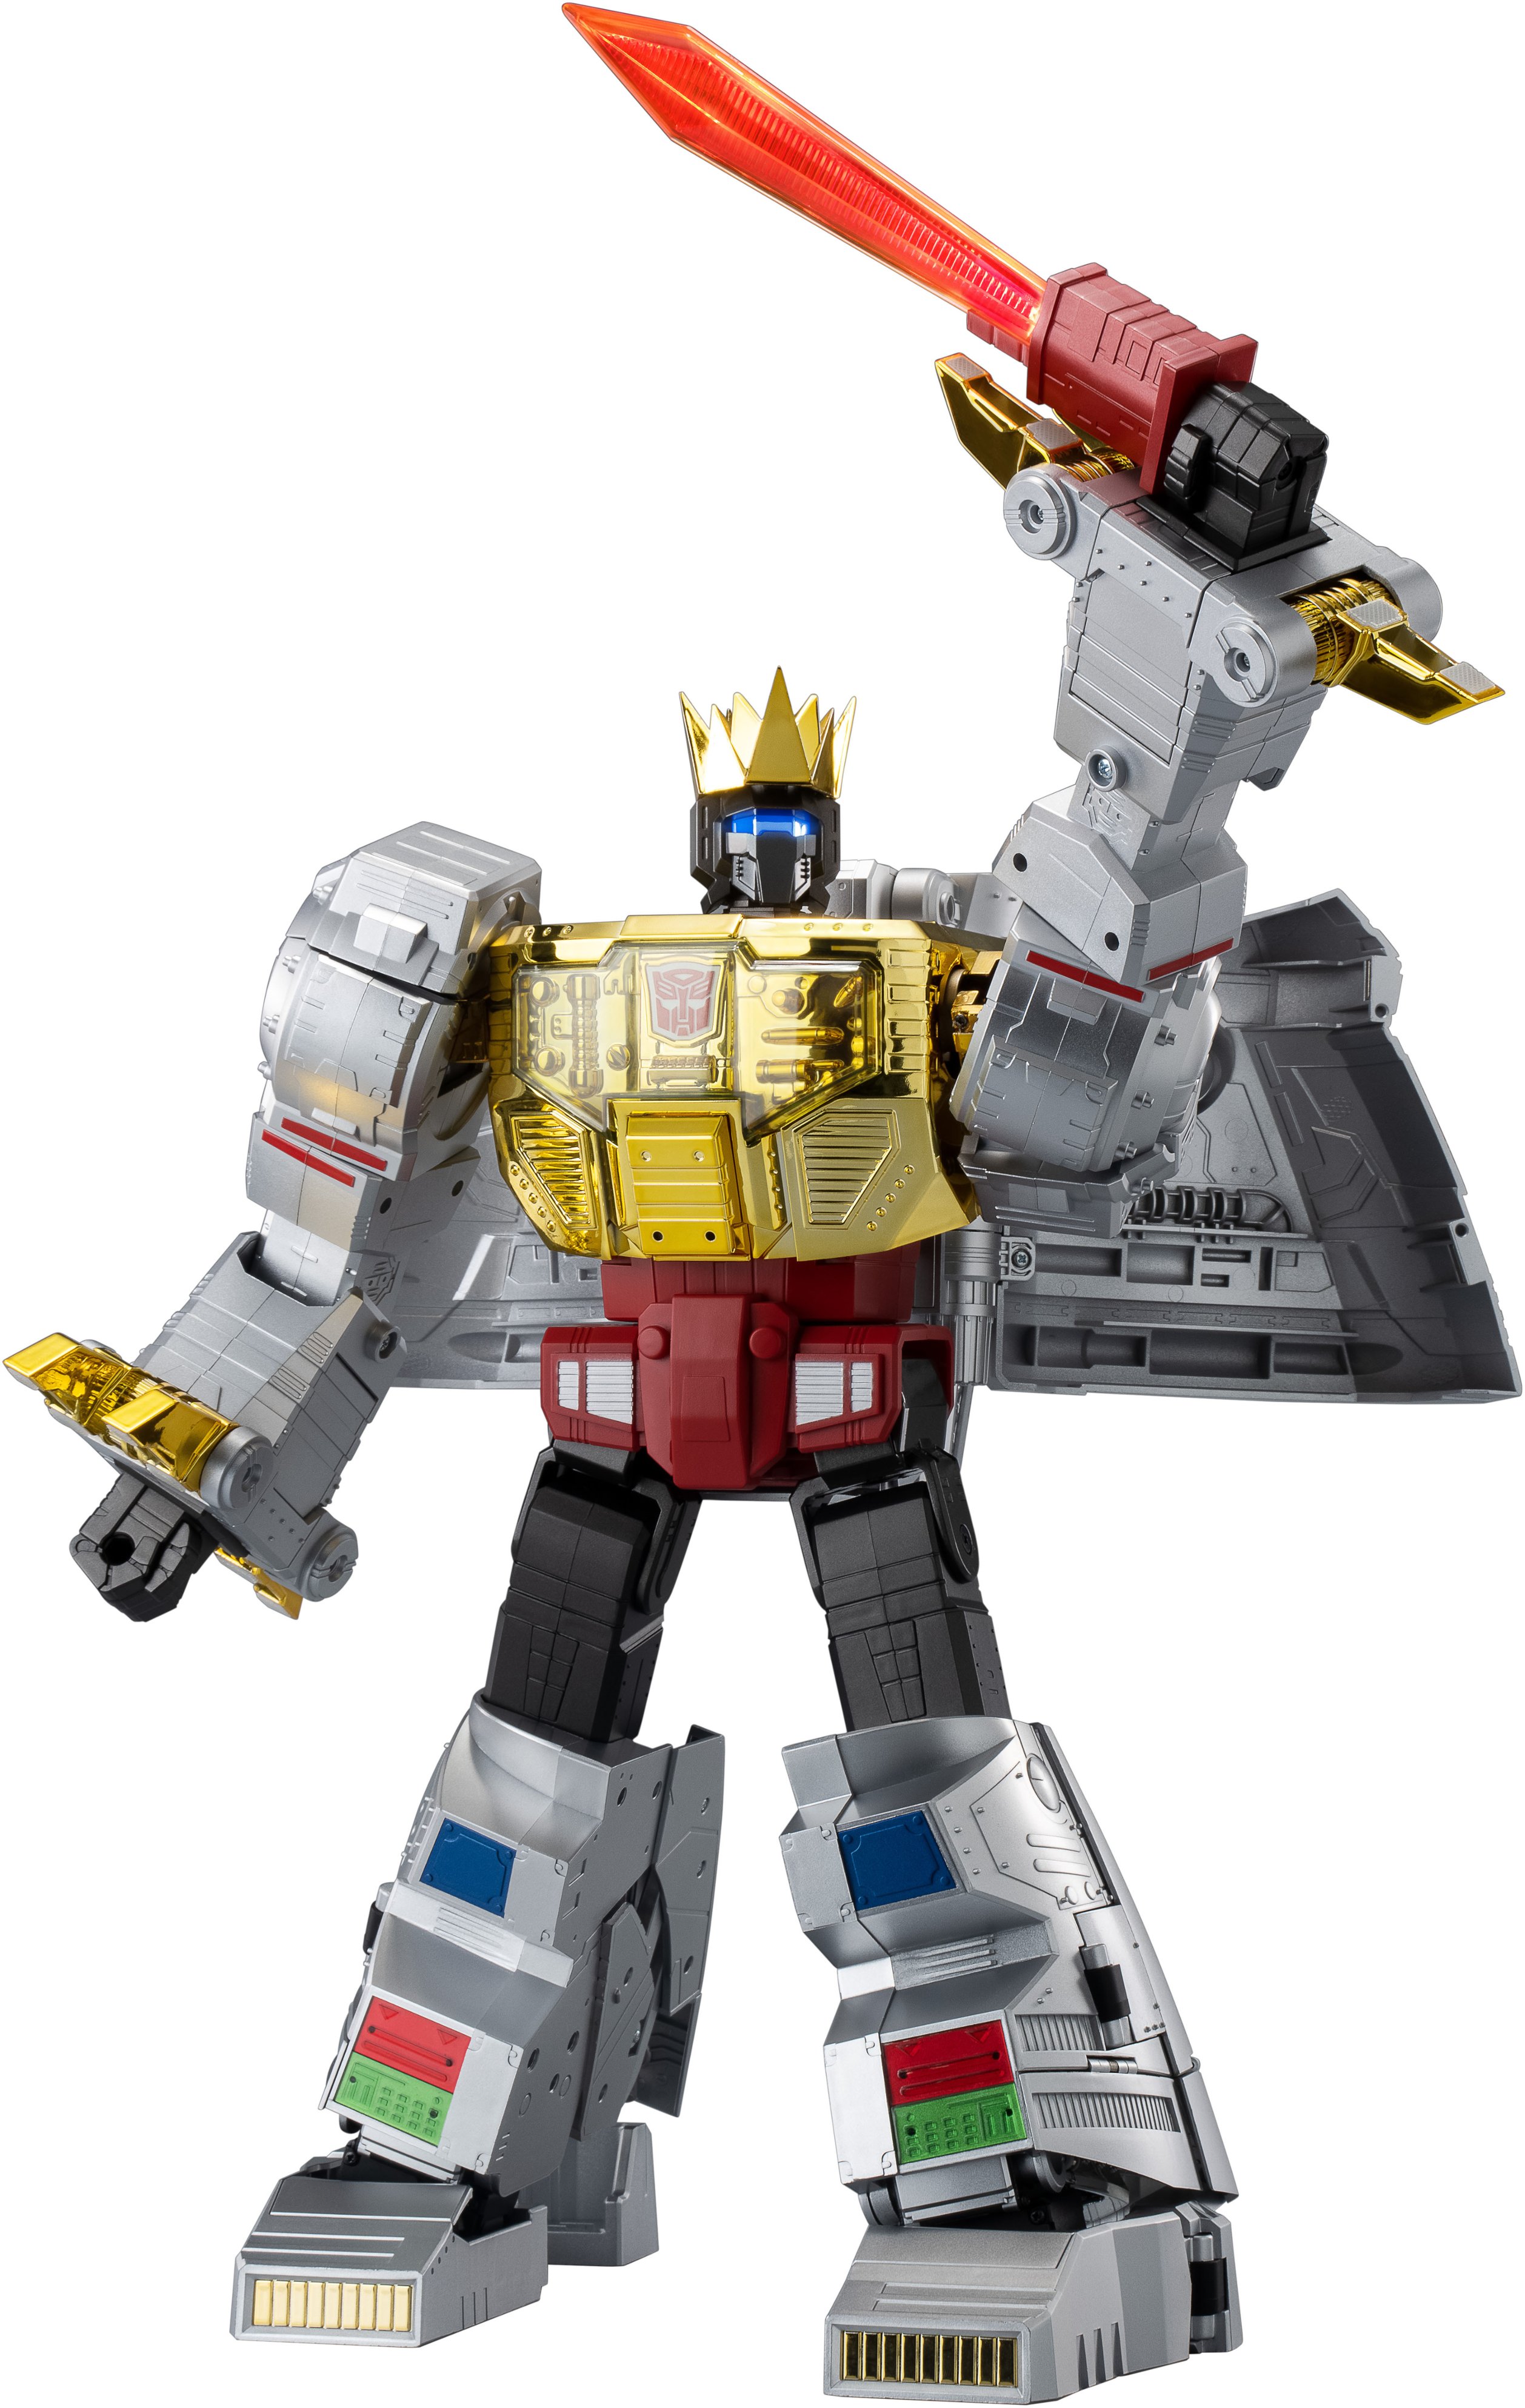 Transformers Grimlock Auto-Converting Robot - Flagship Collector's Edi –  Hasbro Pulse